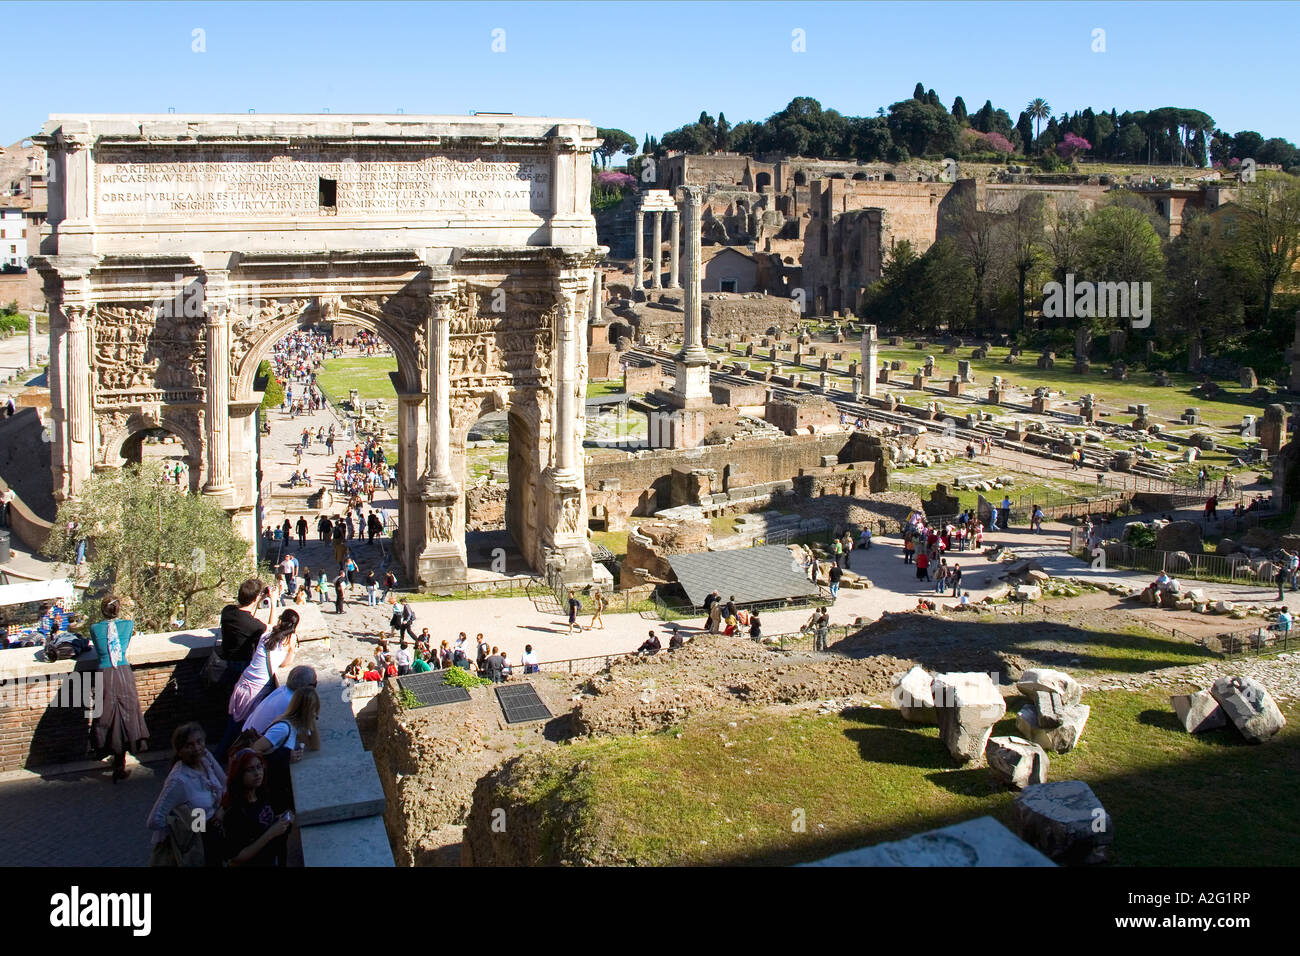 Arch of Septimius Severus Roman Forum ancient ruins in Rome Italy Europe EU Stock Photo